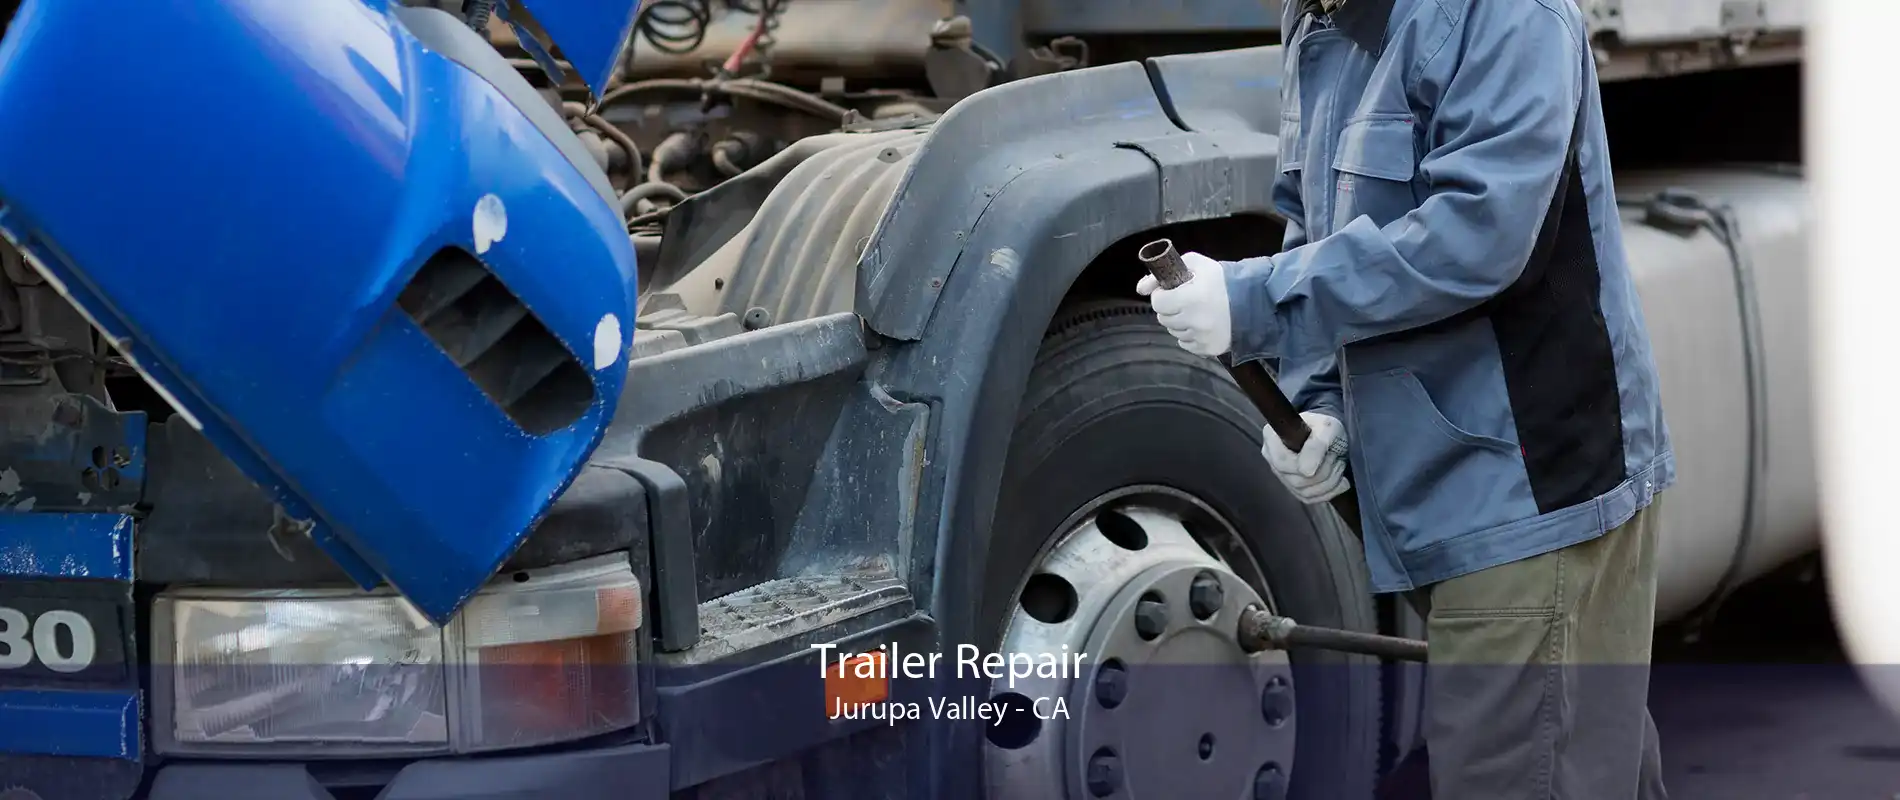 Trailer Repair Jurupa Valley - CA